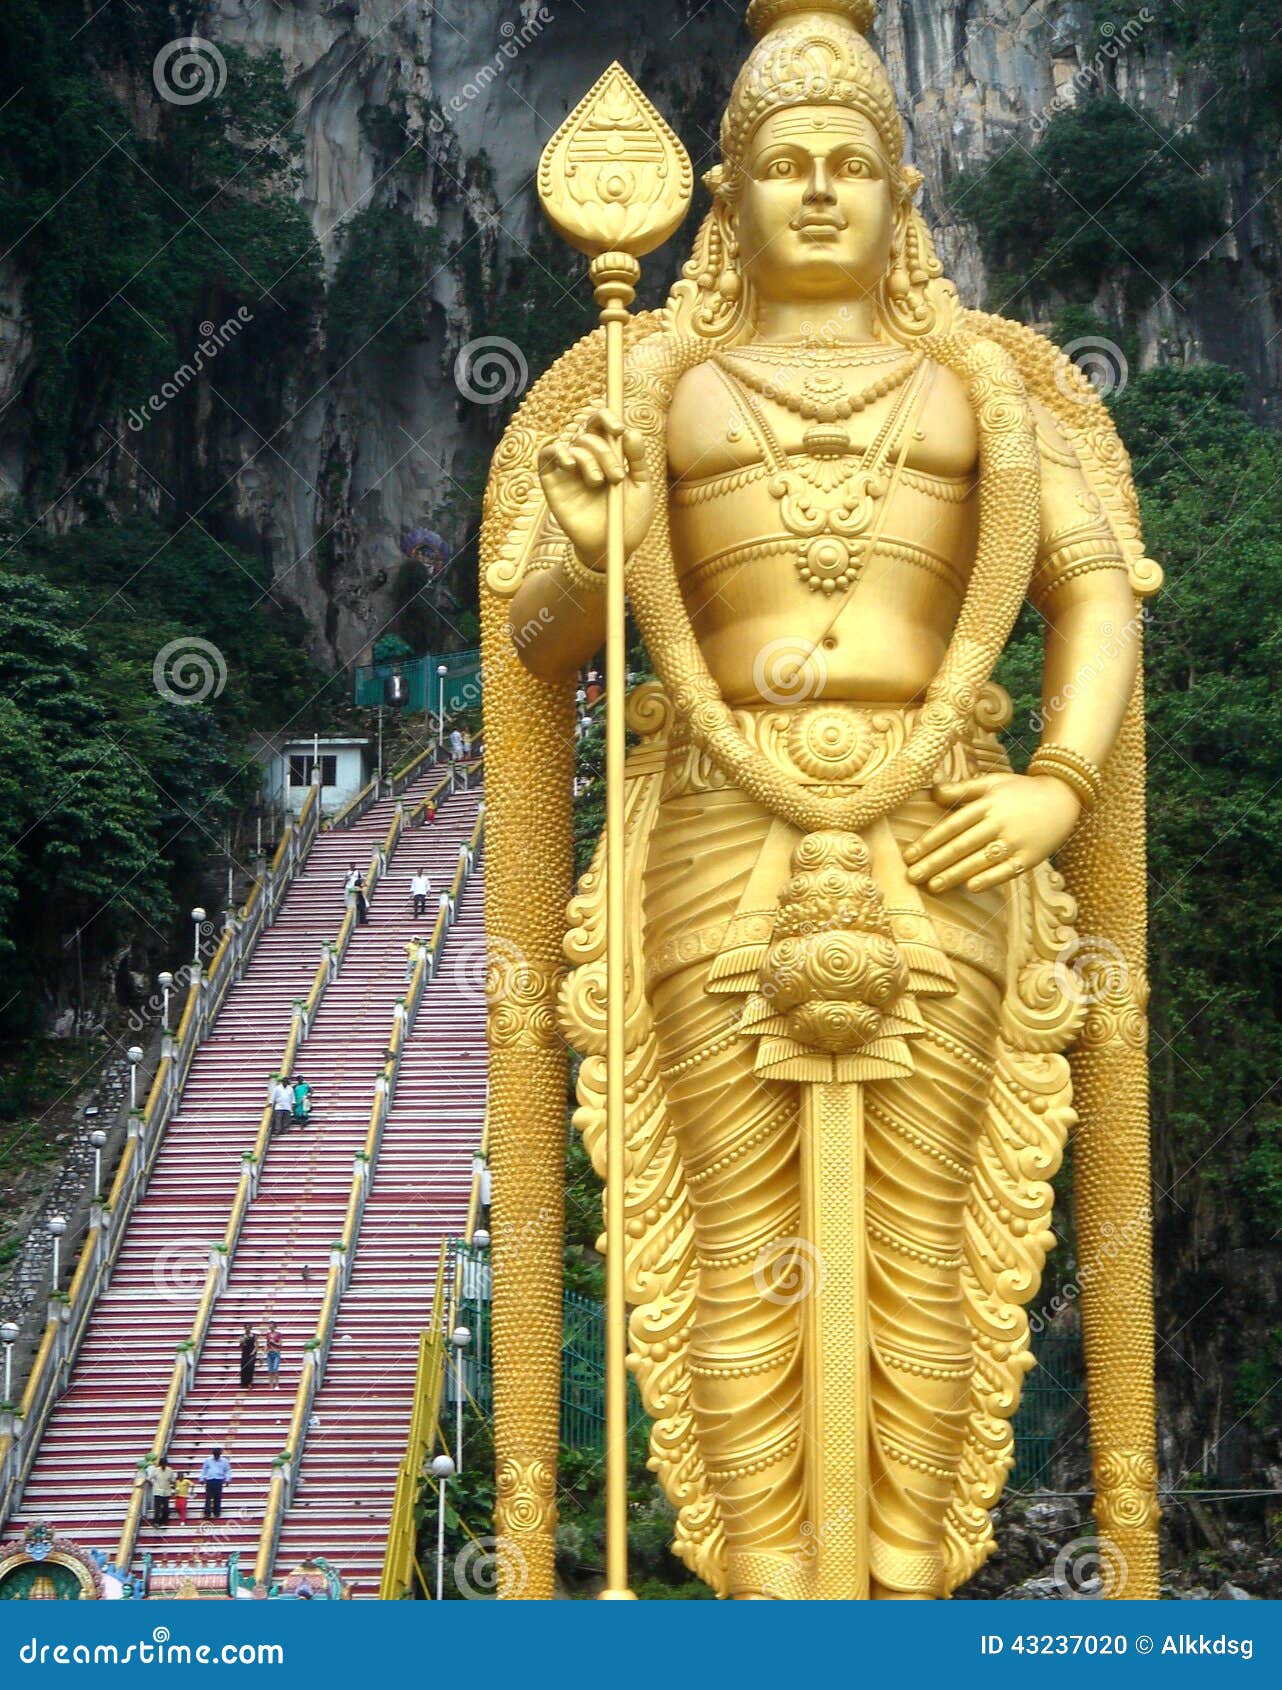 Statue of hindu god stock photo. Image of tourism, murugan - 43237020